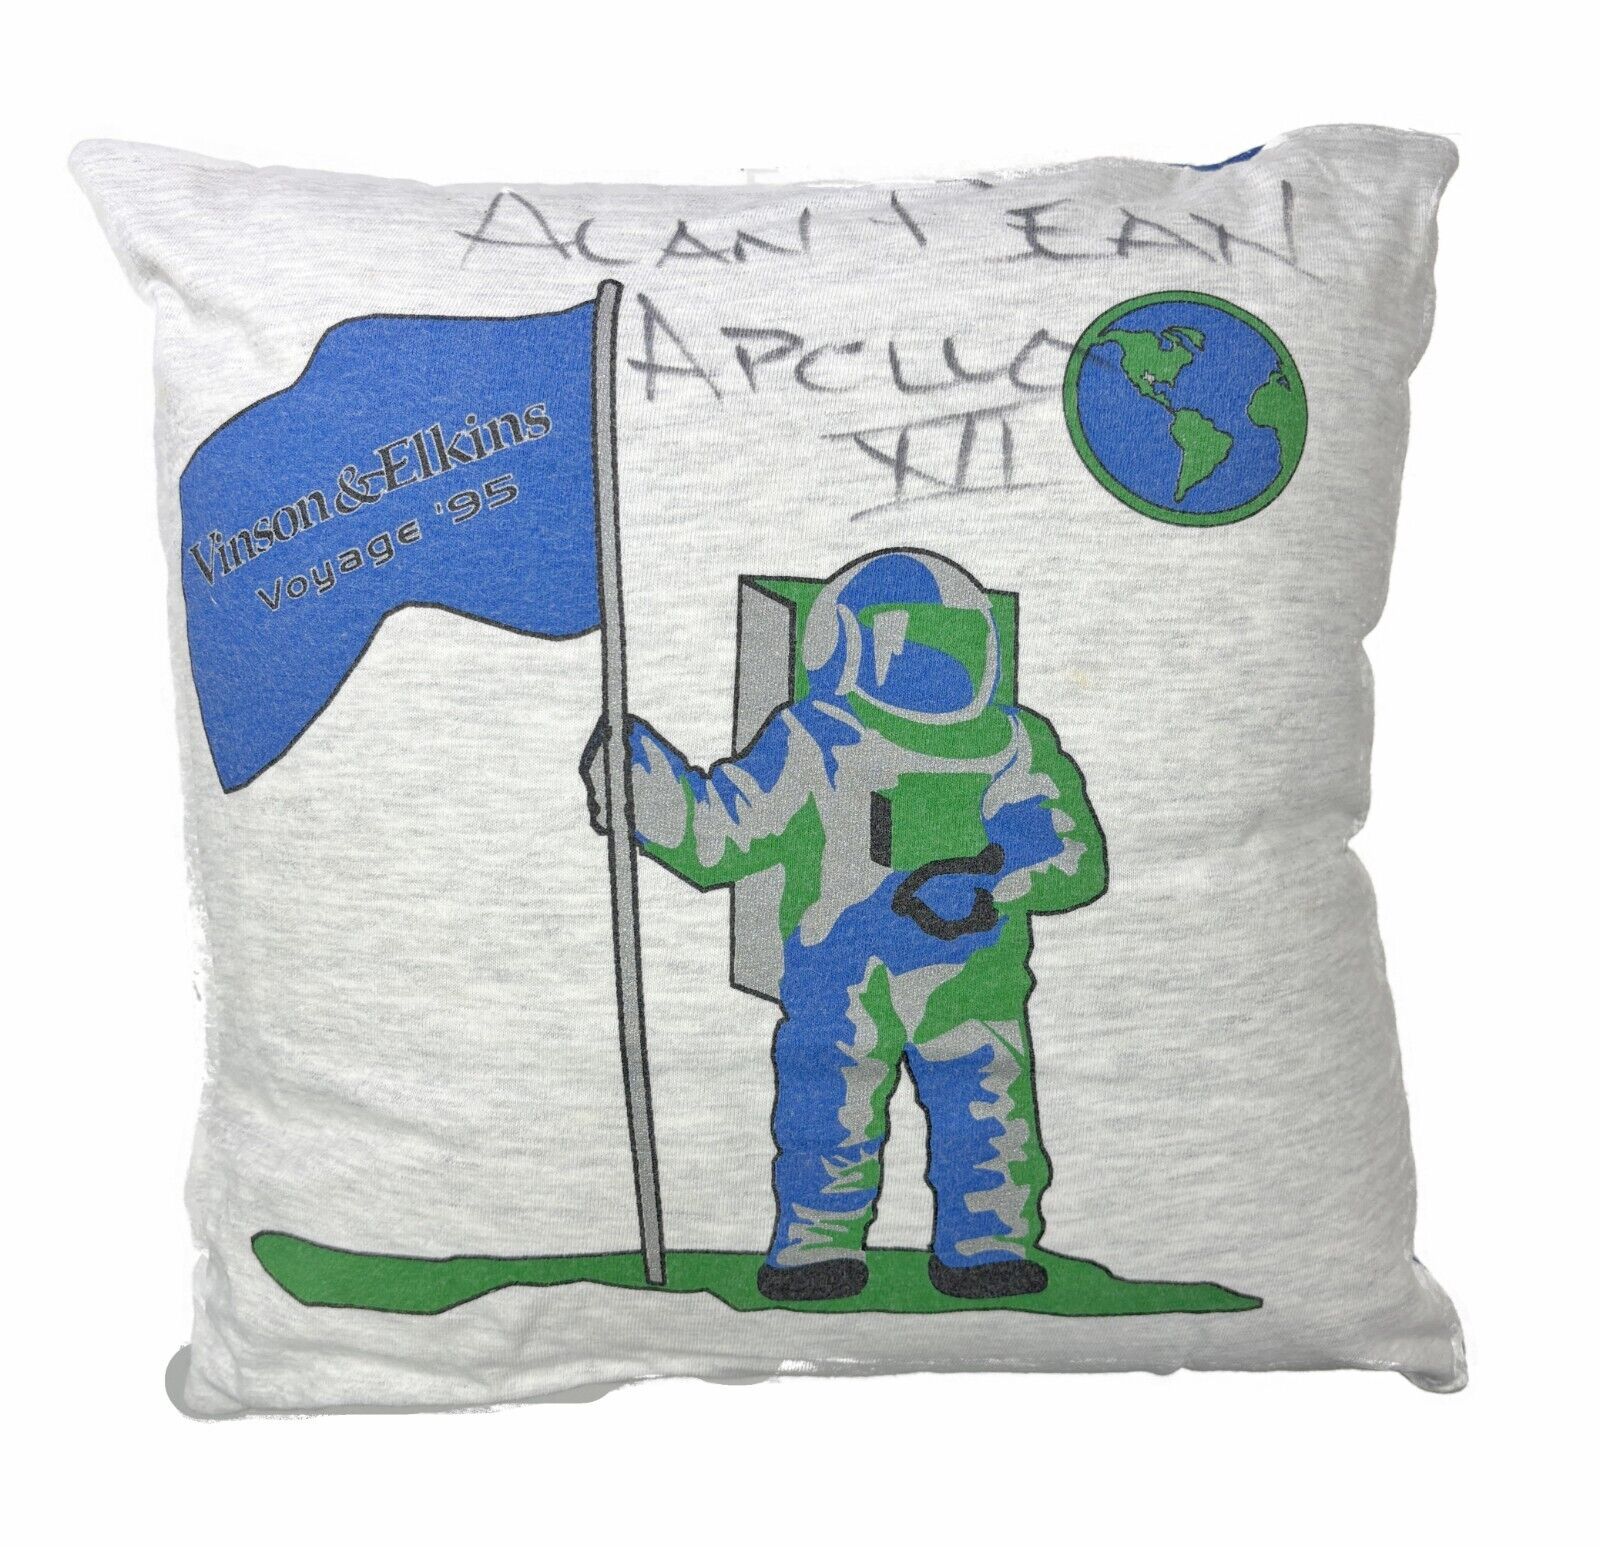 Signed Alan Bean Apollo 12 Throw Pillow Astronaut Space Moon Vinson Elkins ‘95